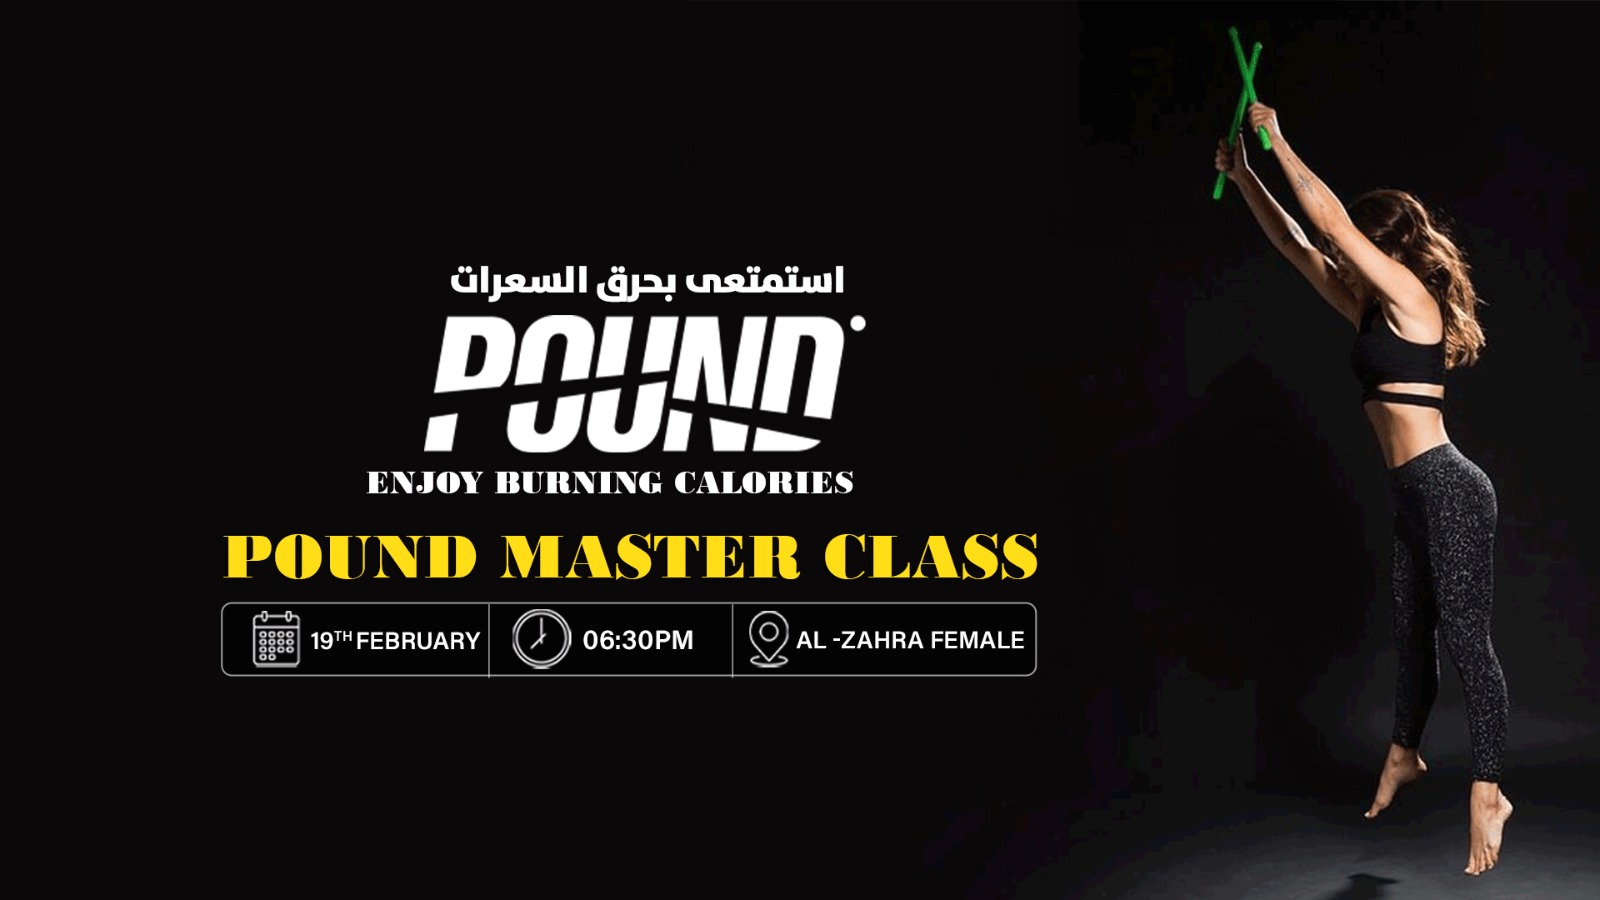 Pound Master Class